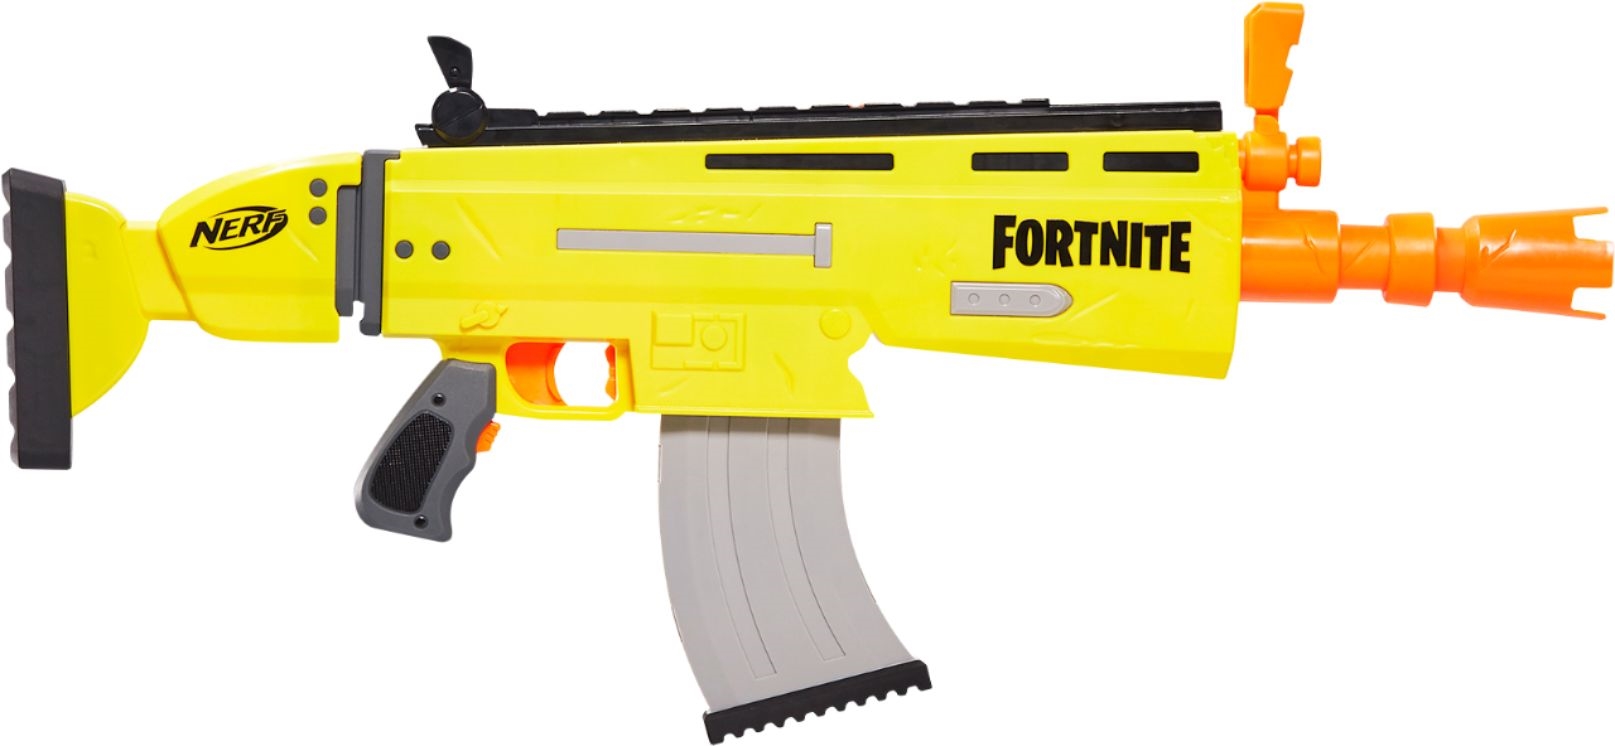 Fortnite Blasters Nerf Gun